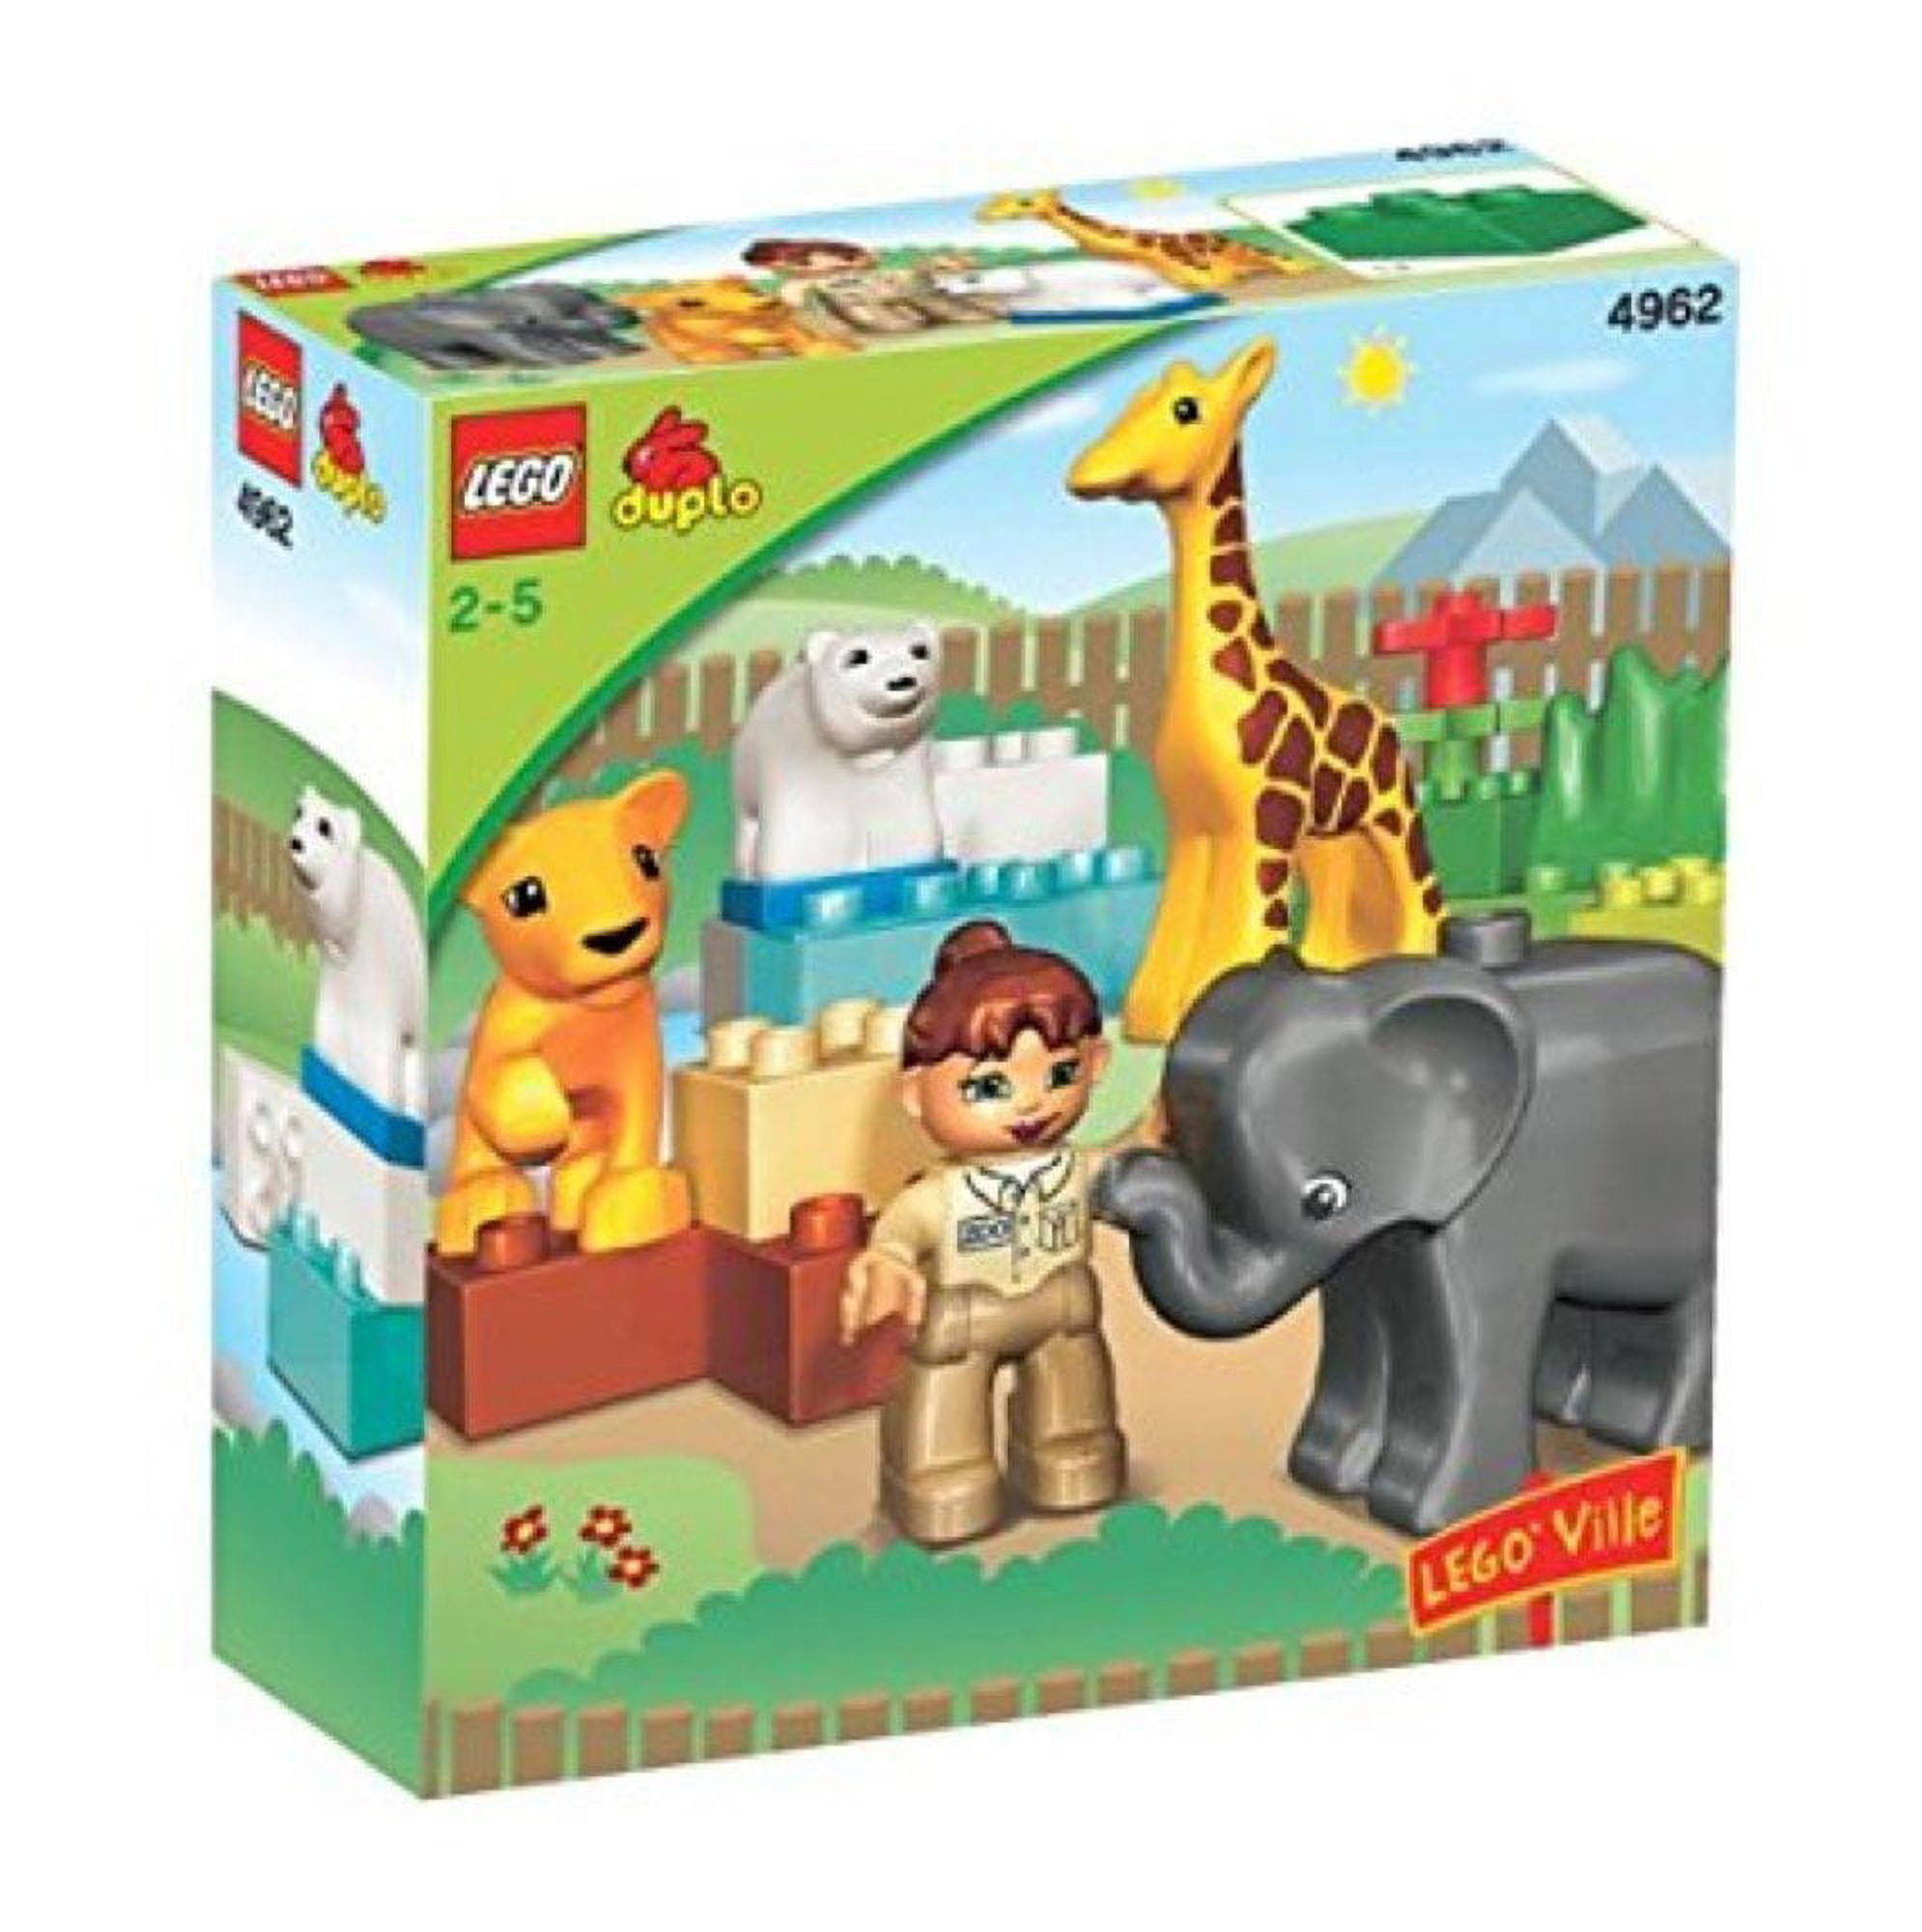 LEGO DUPLO Town 4962 Baby Zoo Building Set 